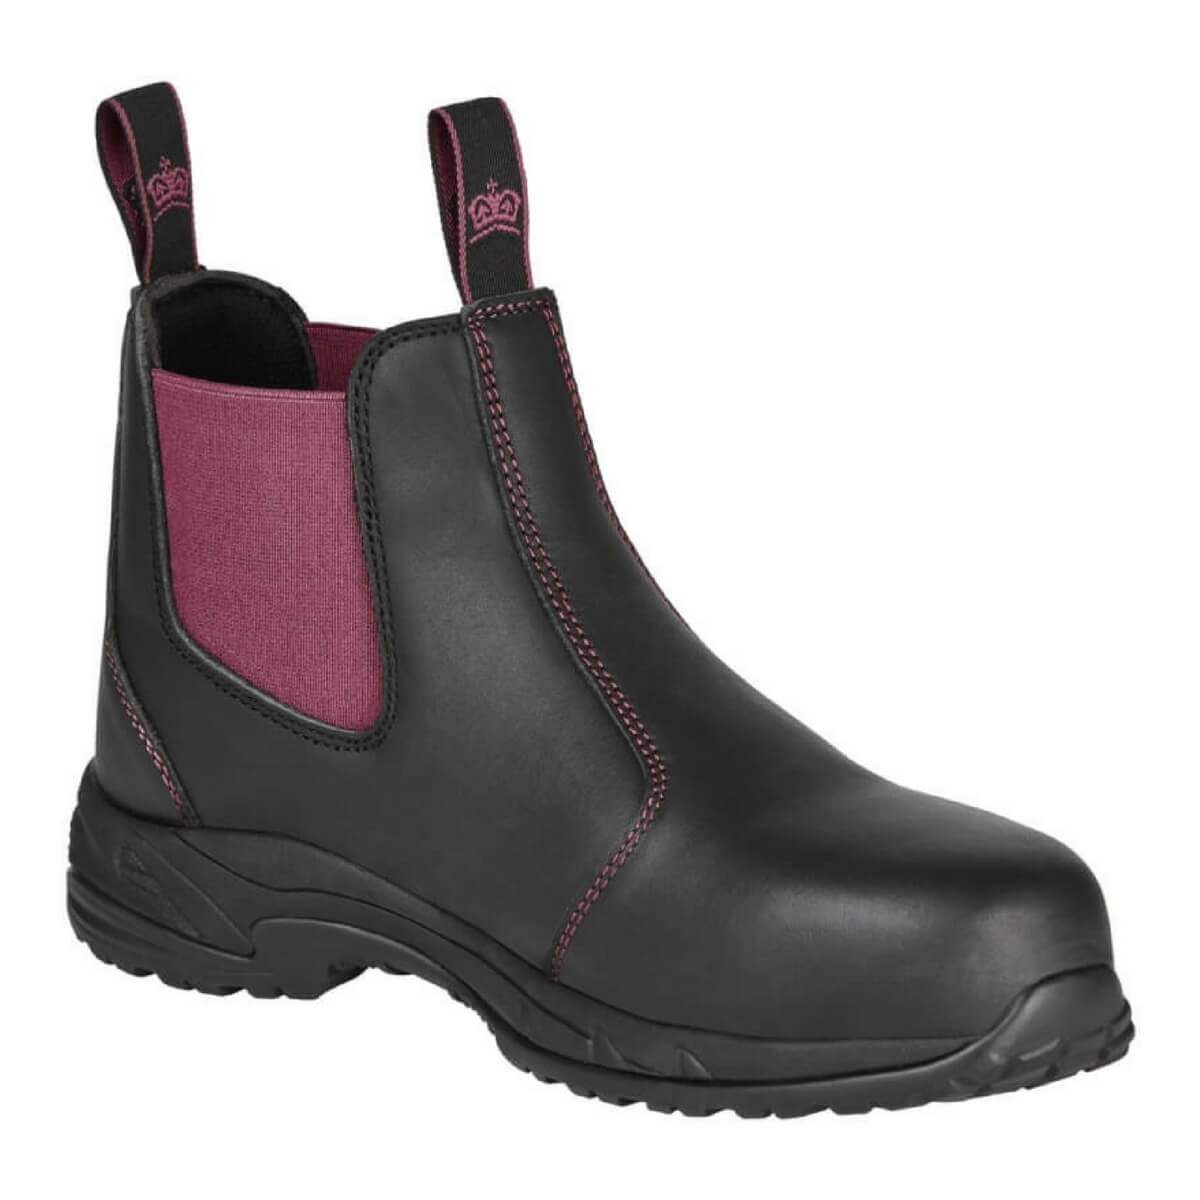 Buy > slip on boots australia > in stock